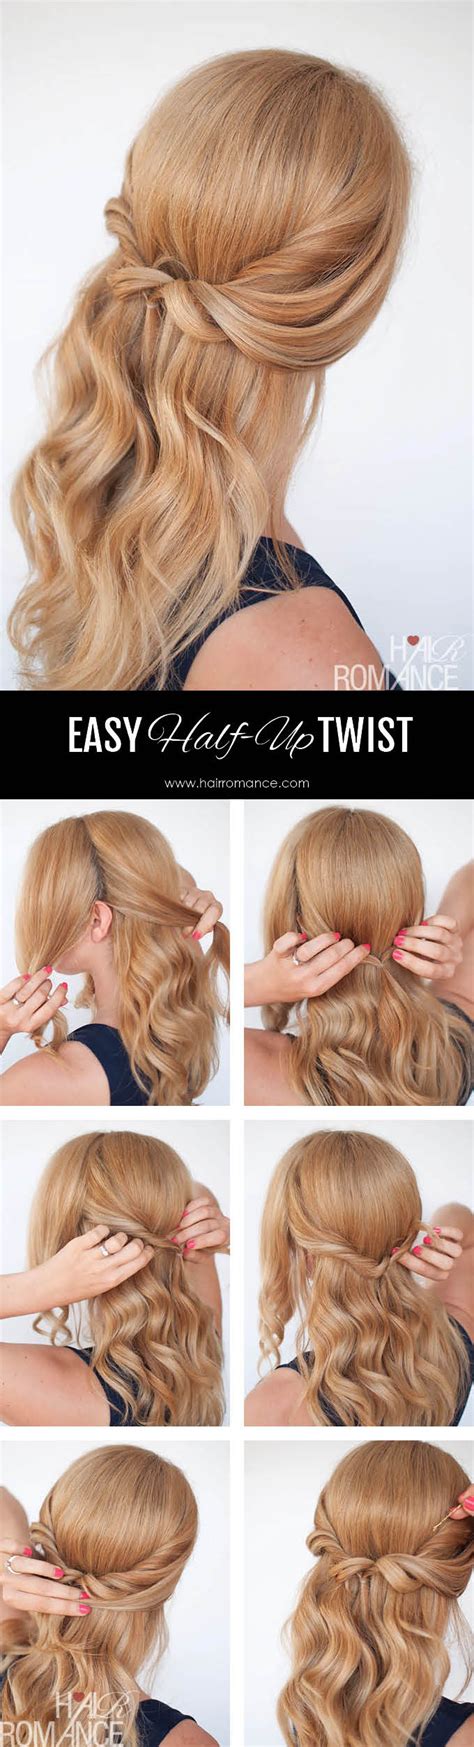 Easy Half Up Twist Hairstyle Tutorial Hair Romance